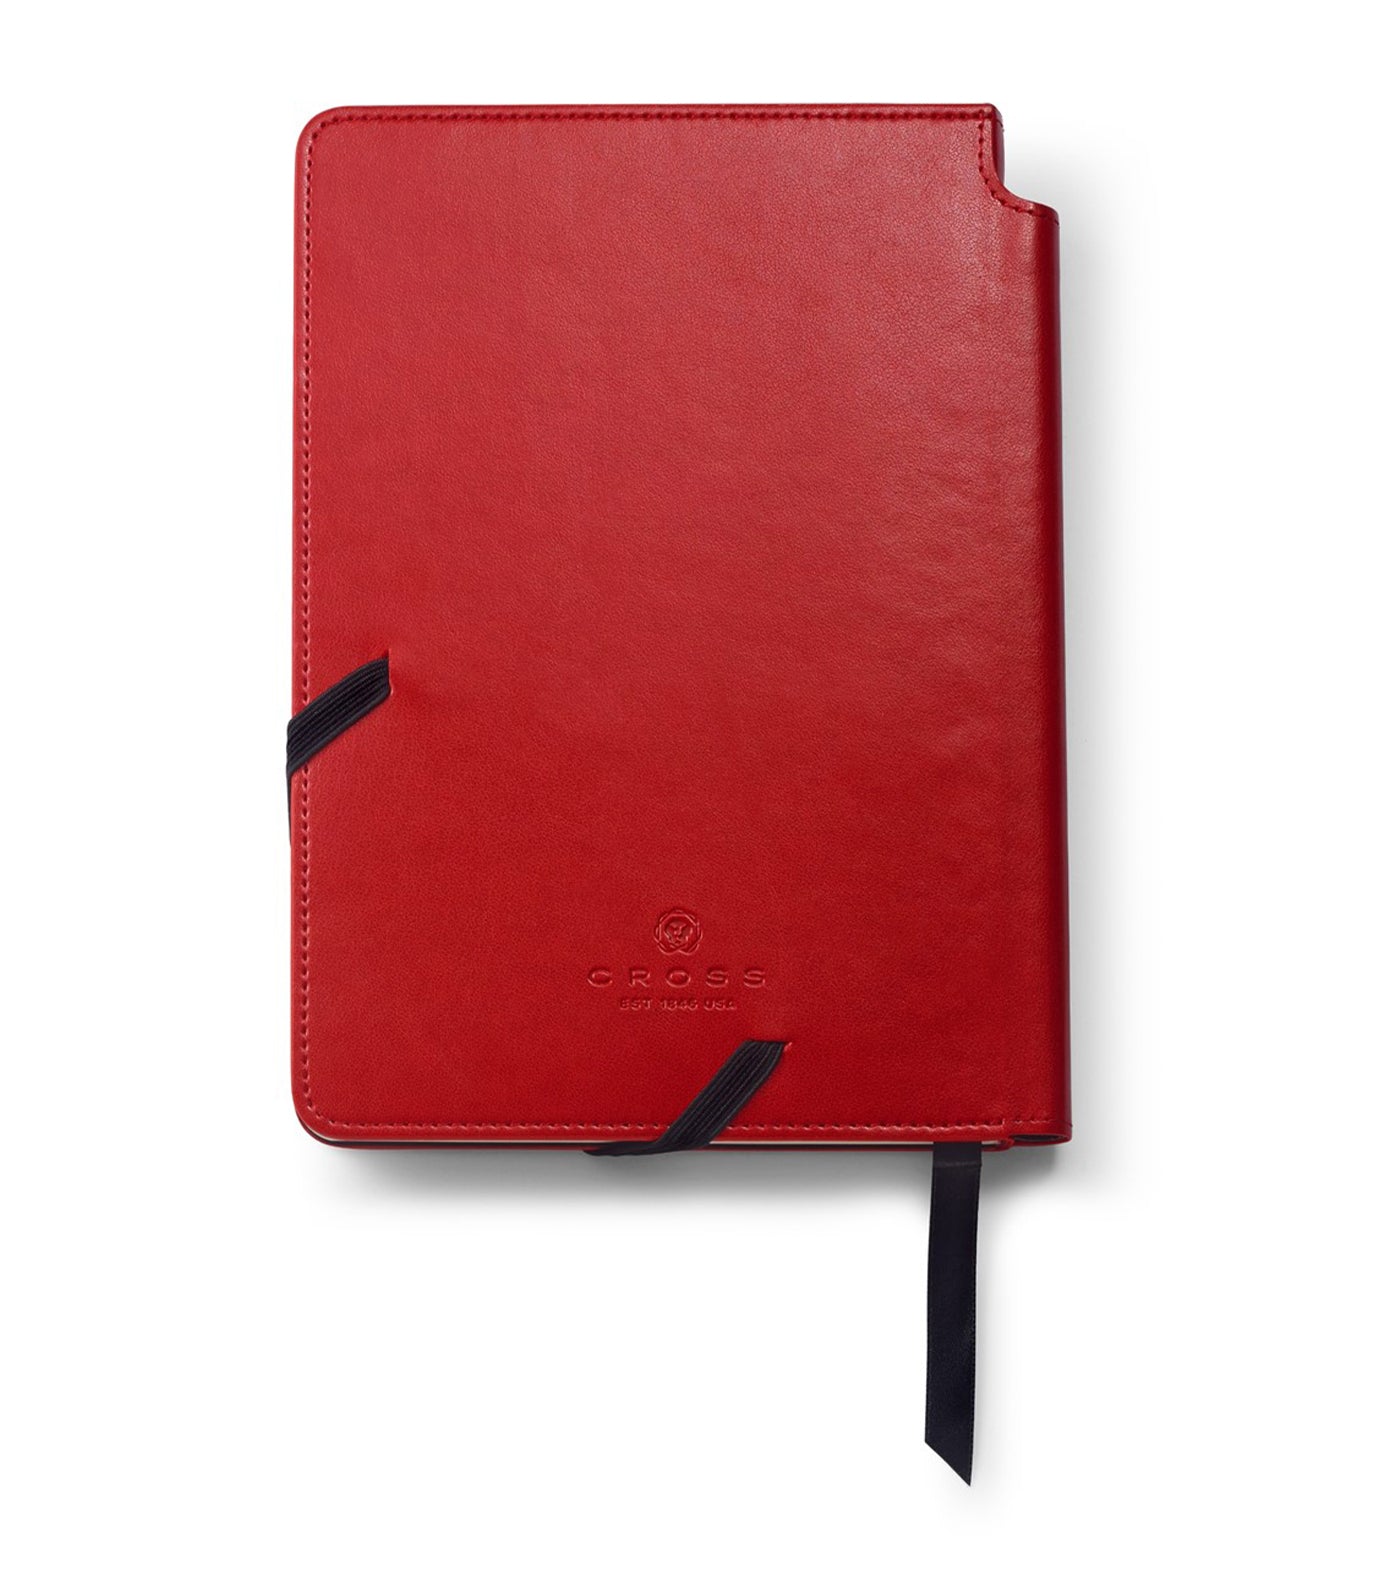 Medium Journal Red